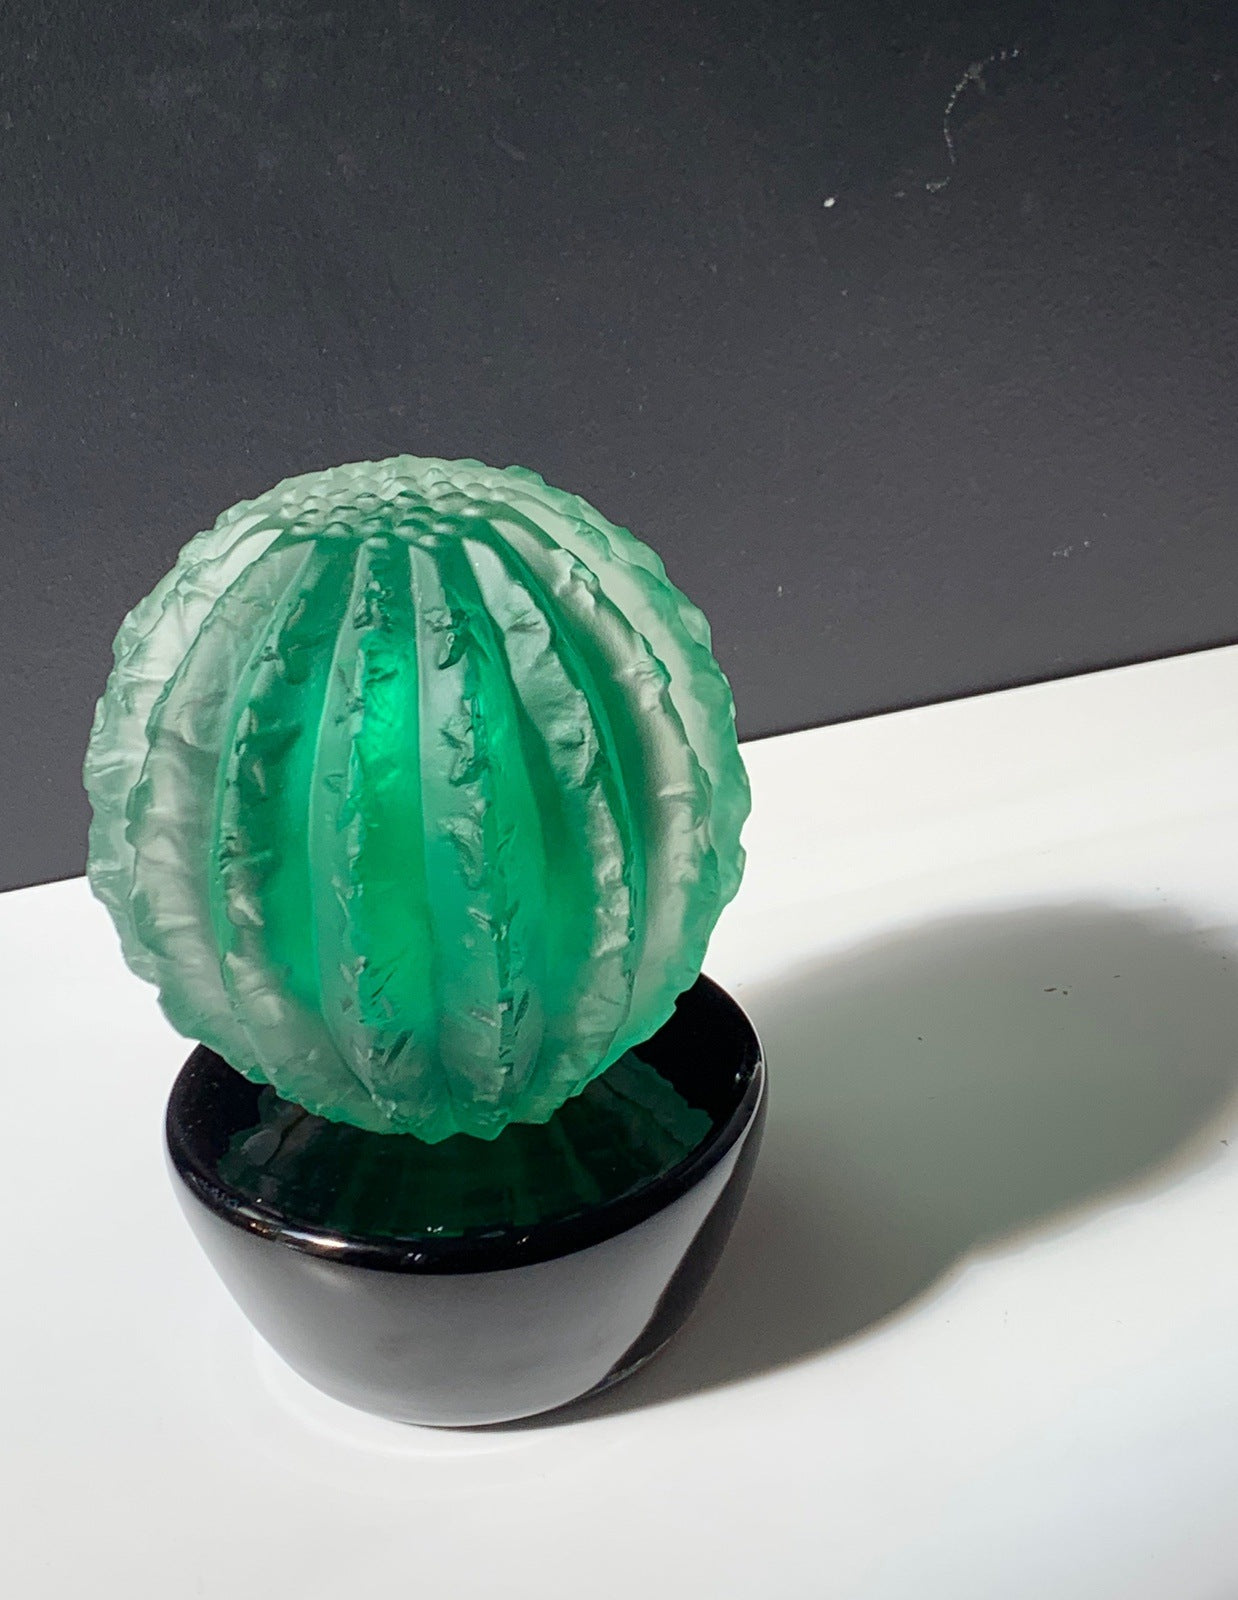 Barrel Cactus Luxury Glass Sculpture Forest Green